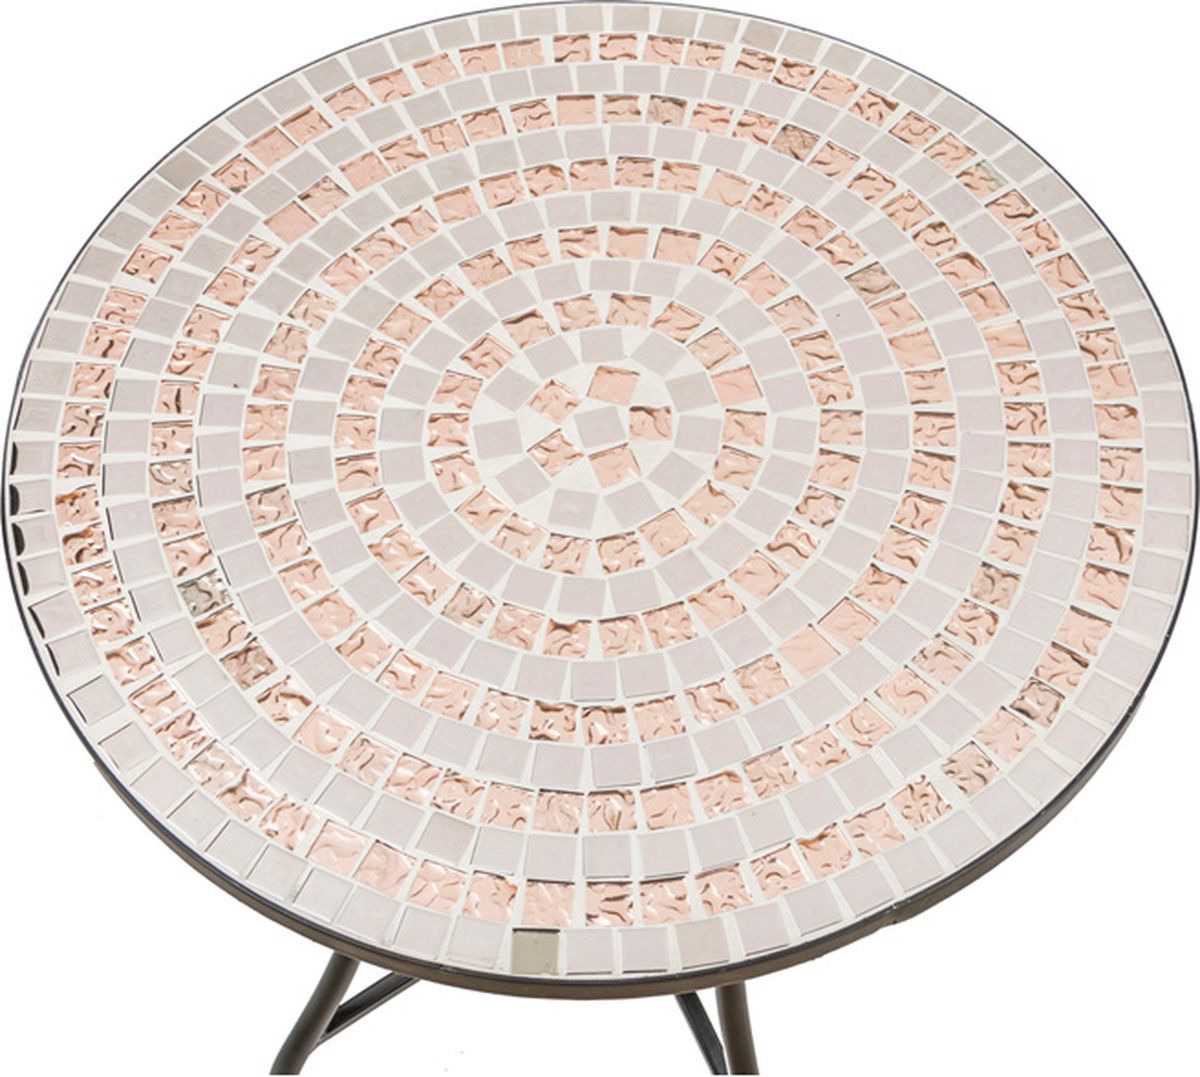 Стол круглый 1 м диаметр. Круглый стол с мозаикой. Столик мозаика круглый. Стол "круглый" диаметр 60см. Белый стол с мозаикой.